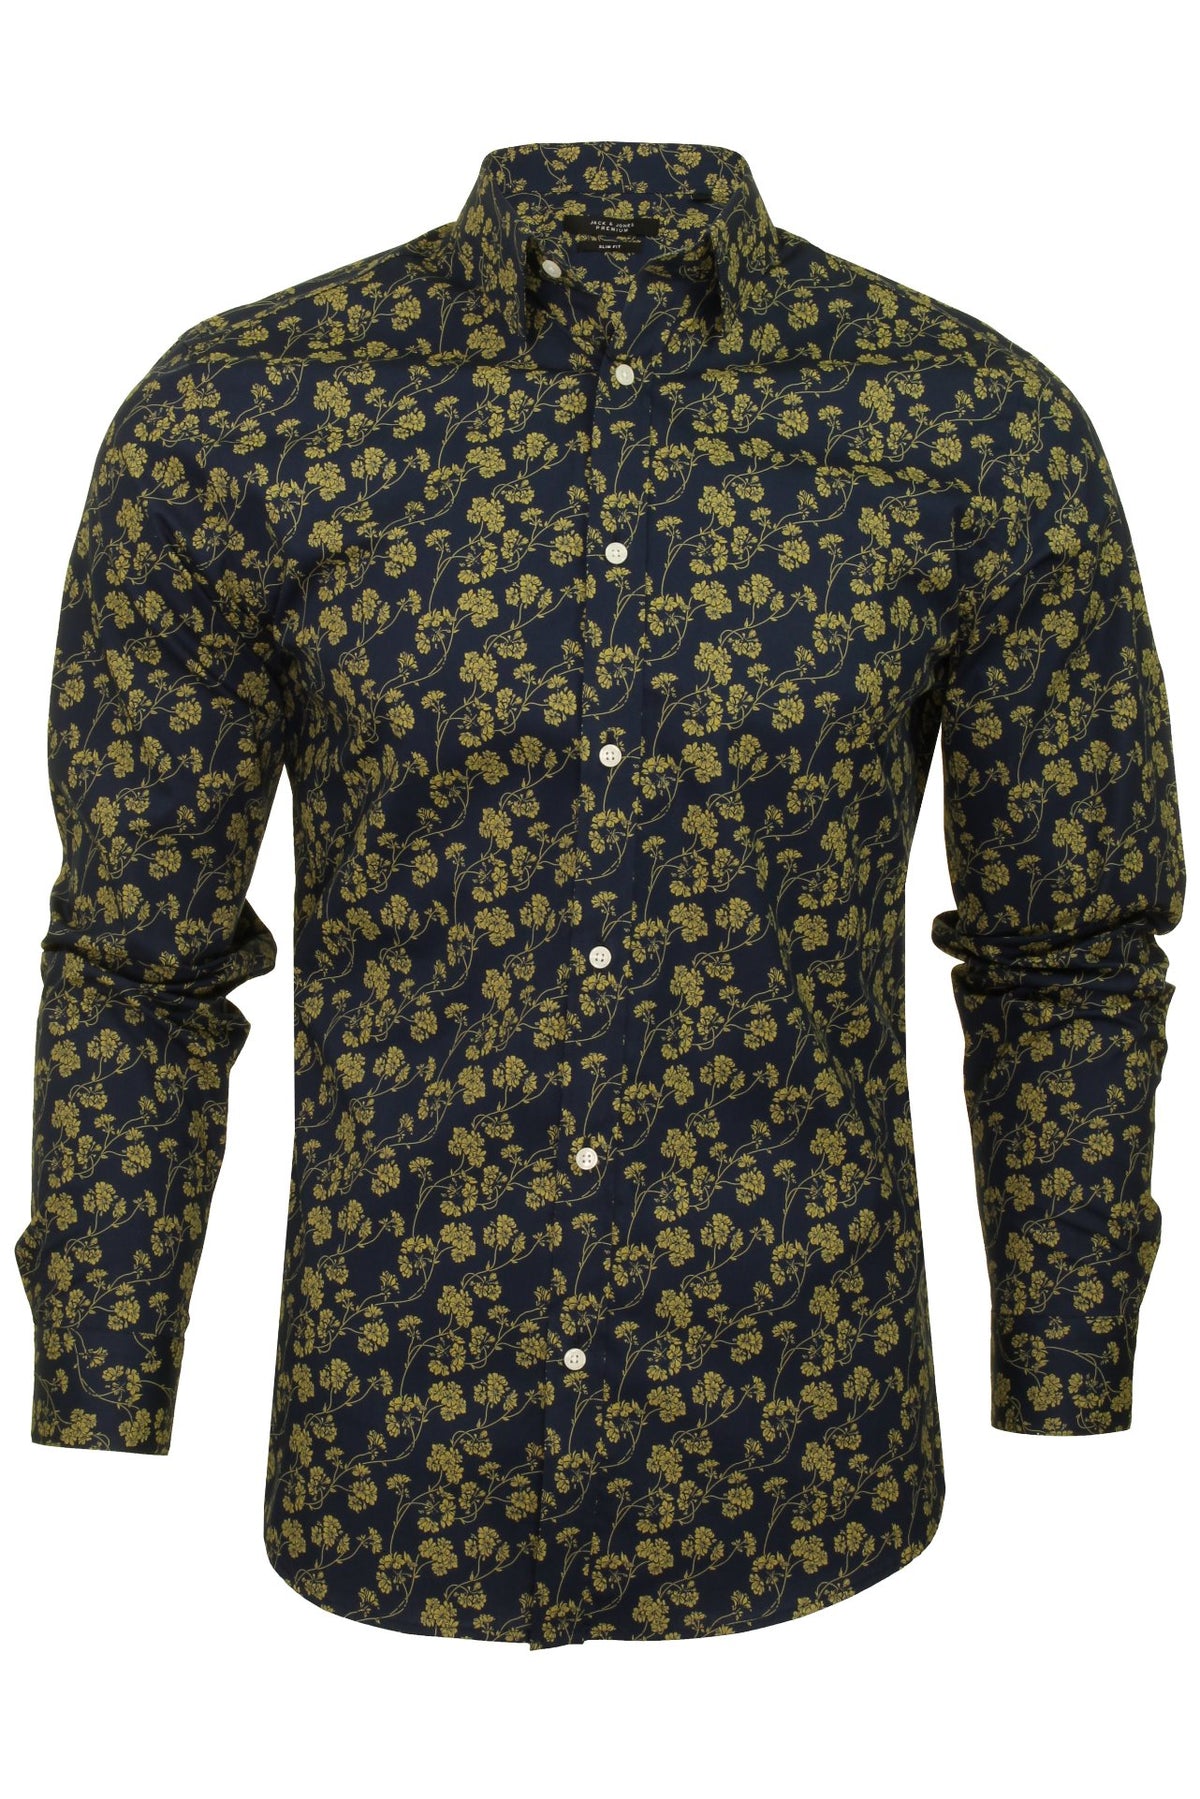 Mens Jack & Jones Floral Long Sleeved Shirt 'JPR ARIZONA', 01, 12145450, Misted Yellow